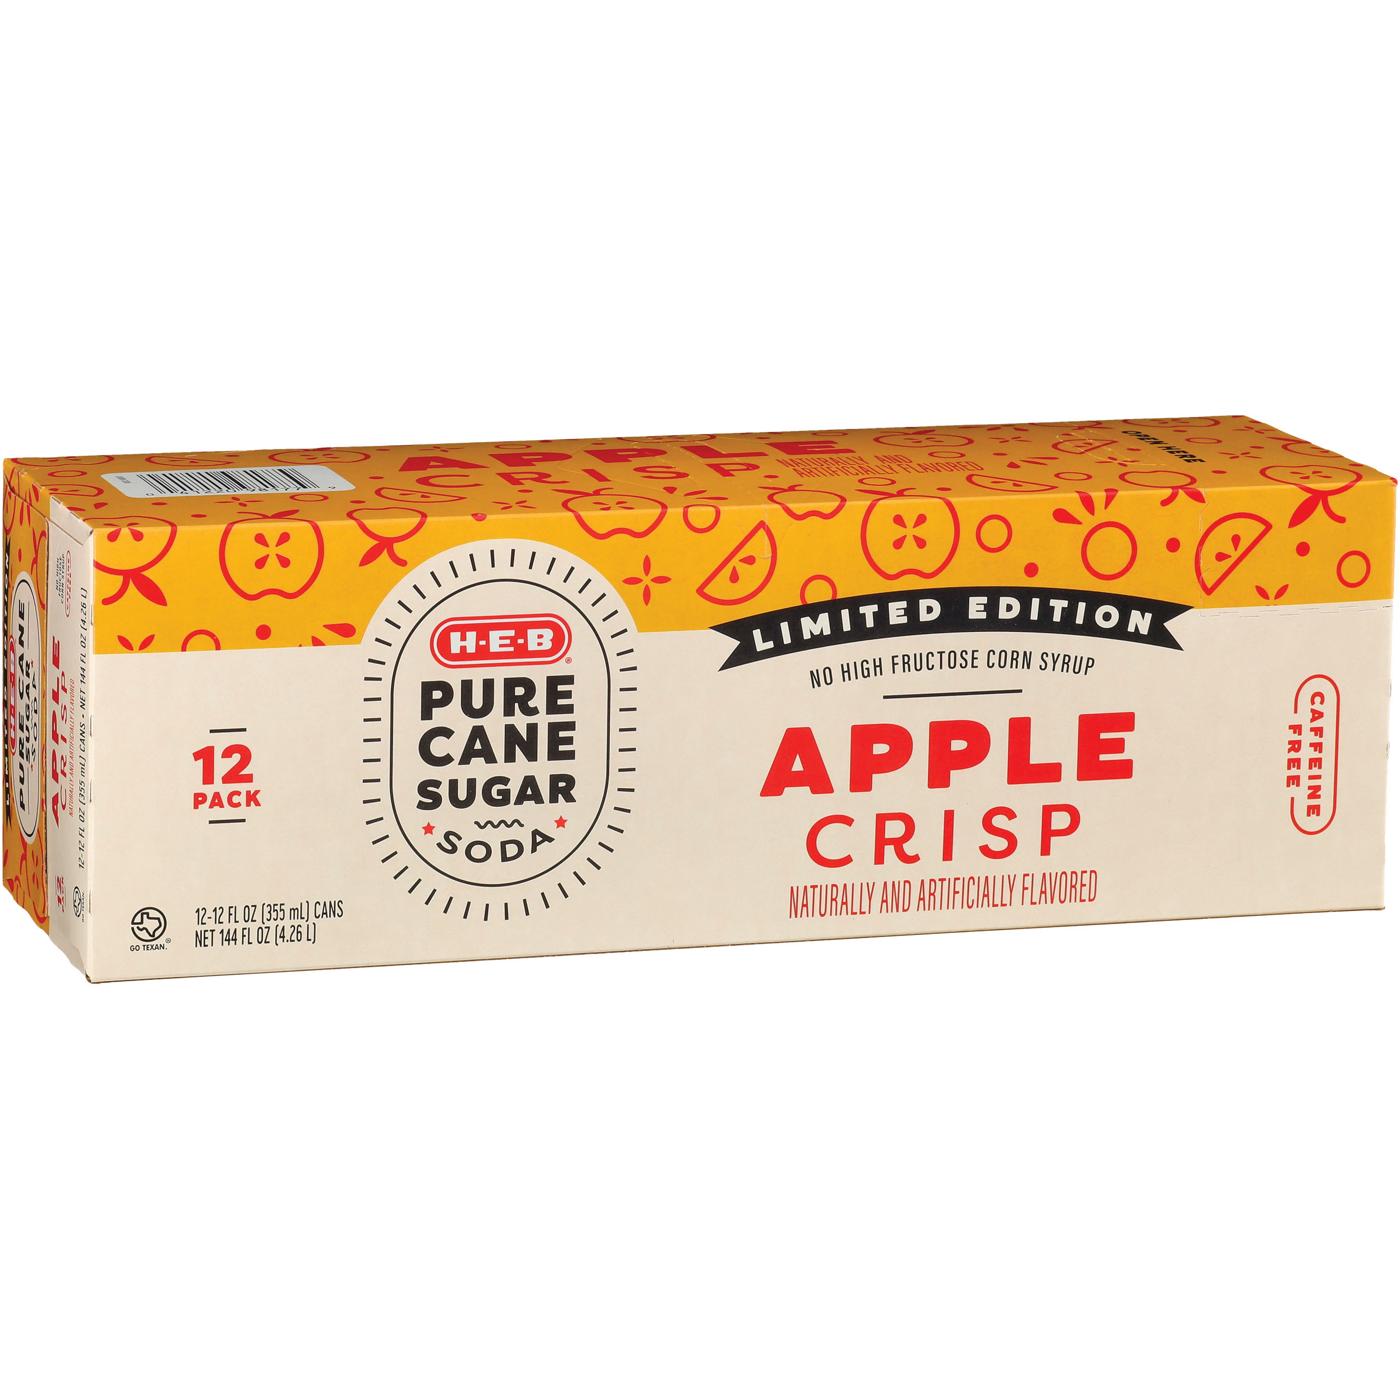 H-E-B Apple Crisp Soda 12 pk Cans - Pure Cane Sugar; image 2 of 2